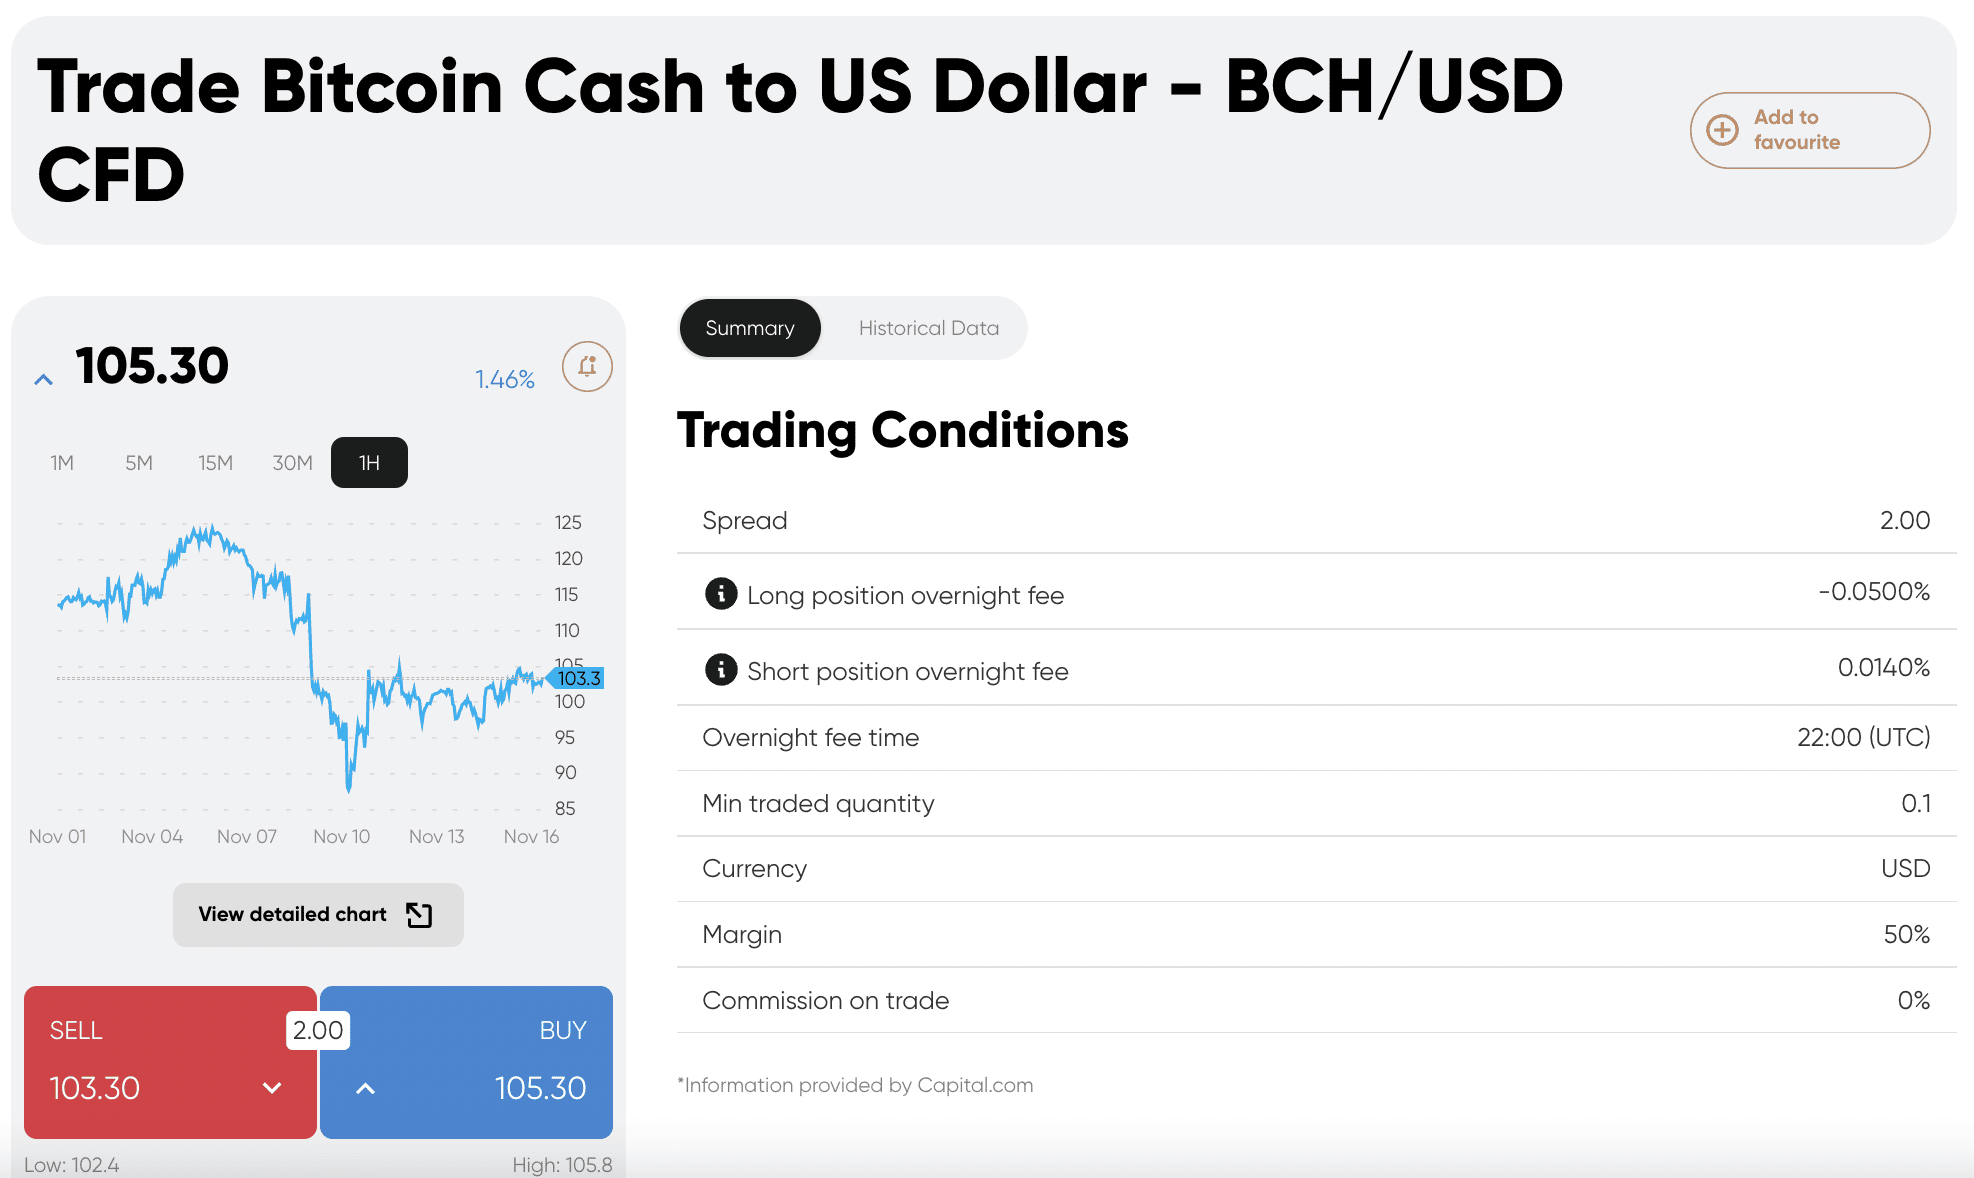 Trade Bitcoin Cash at Capital.com at 0% commission 